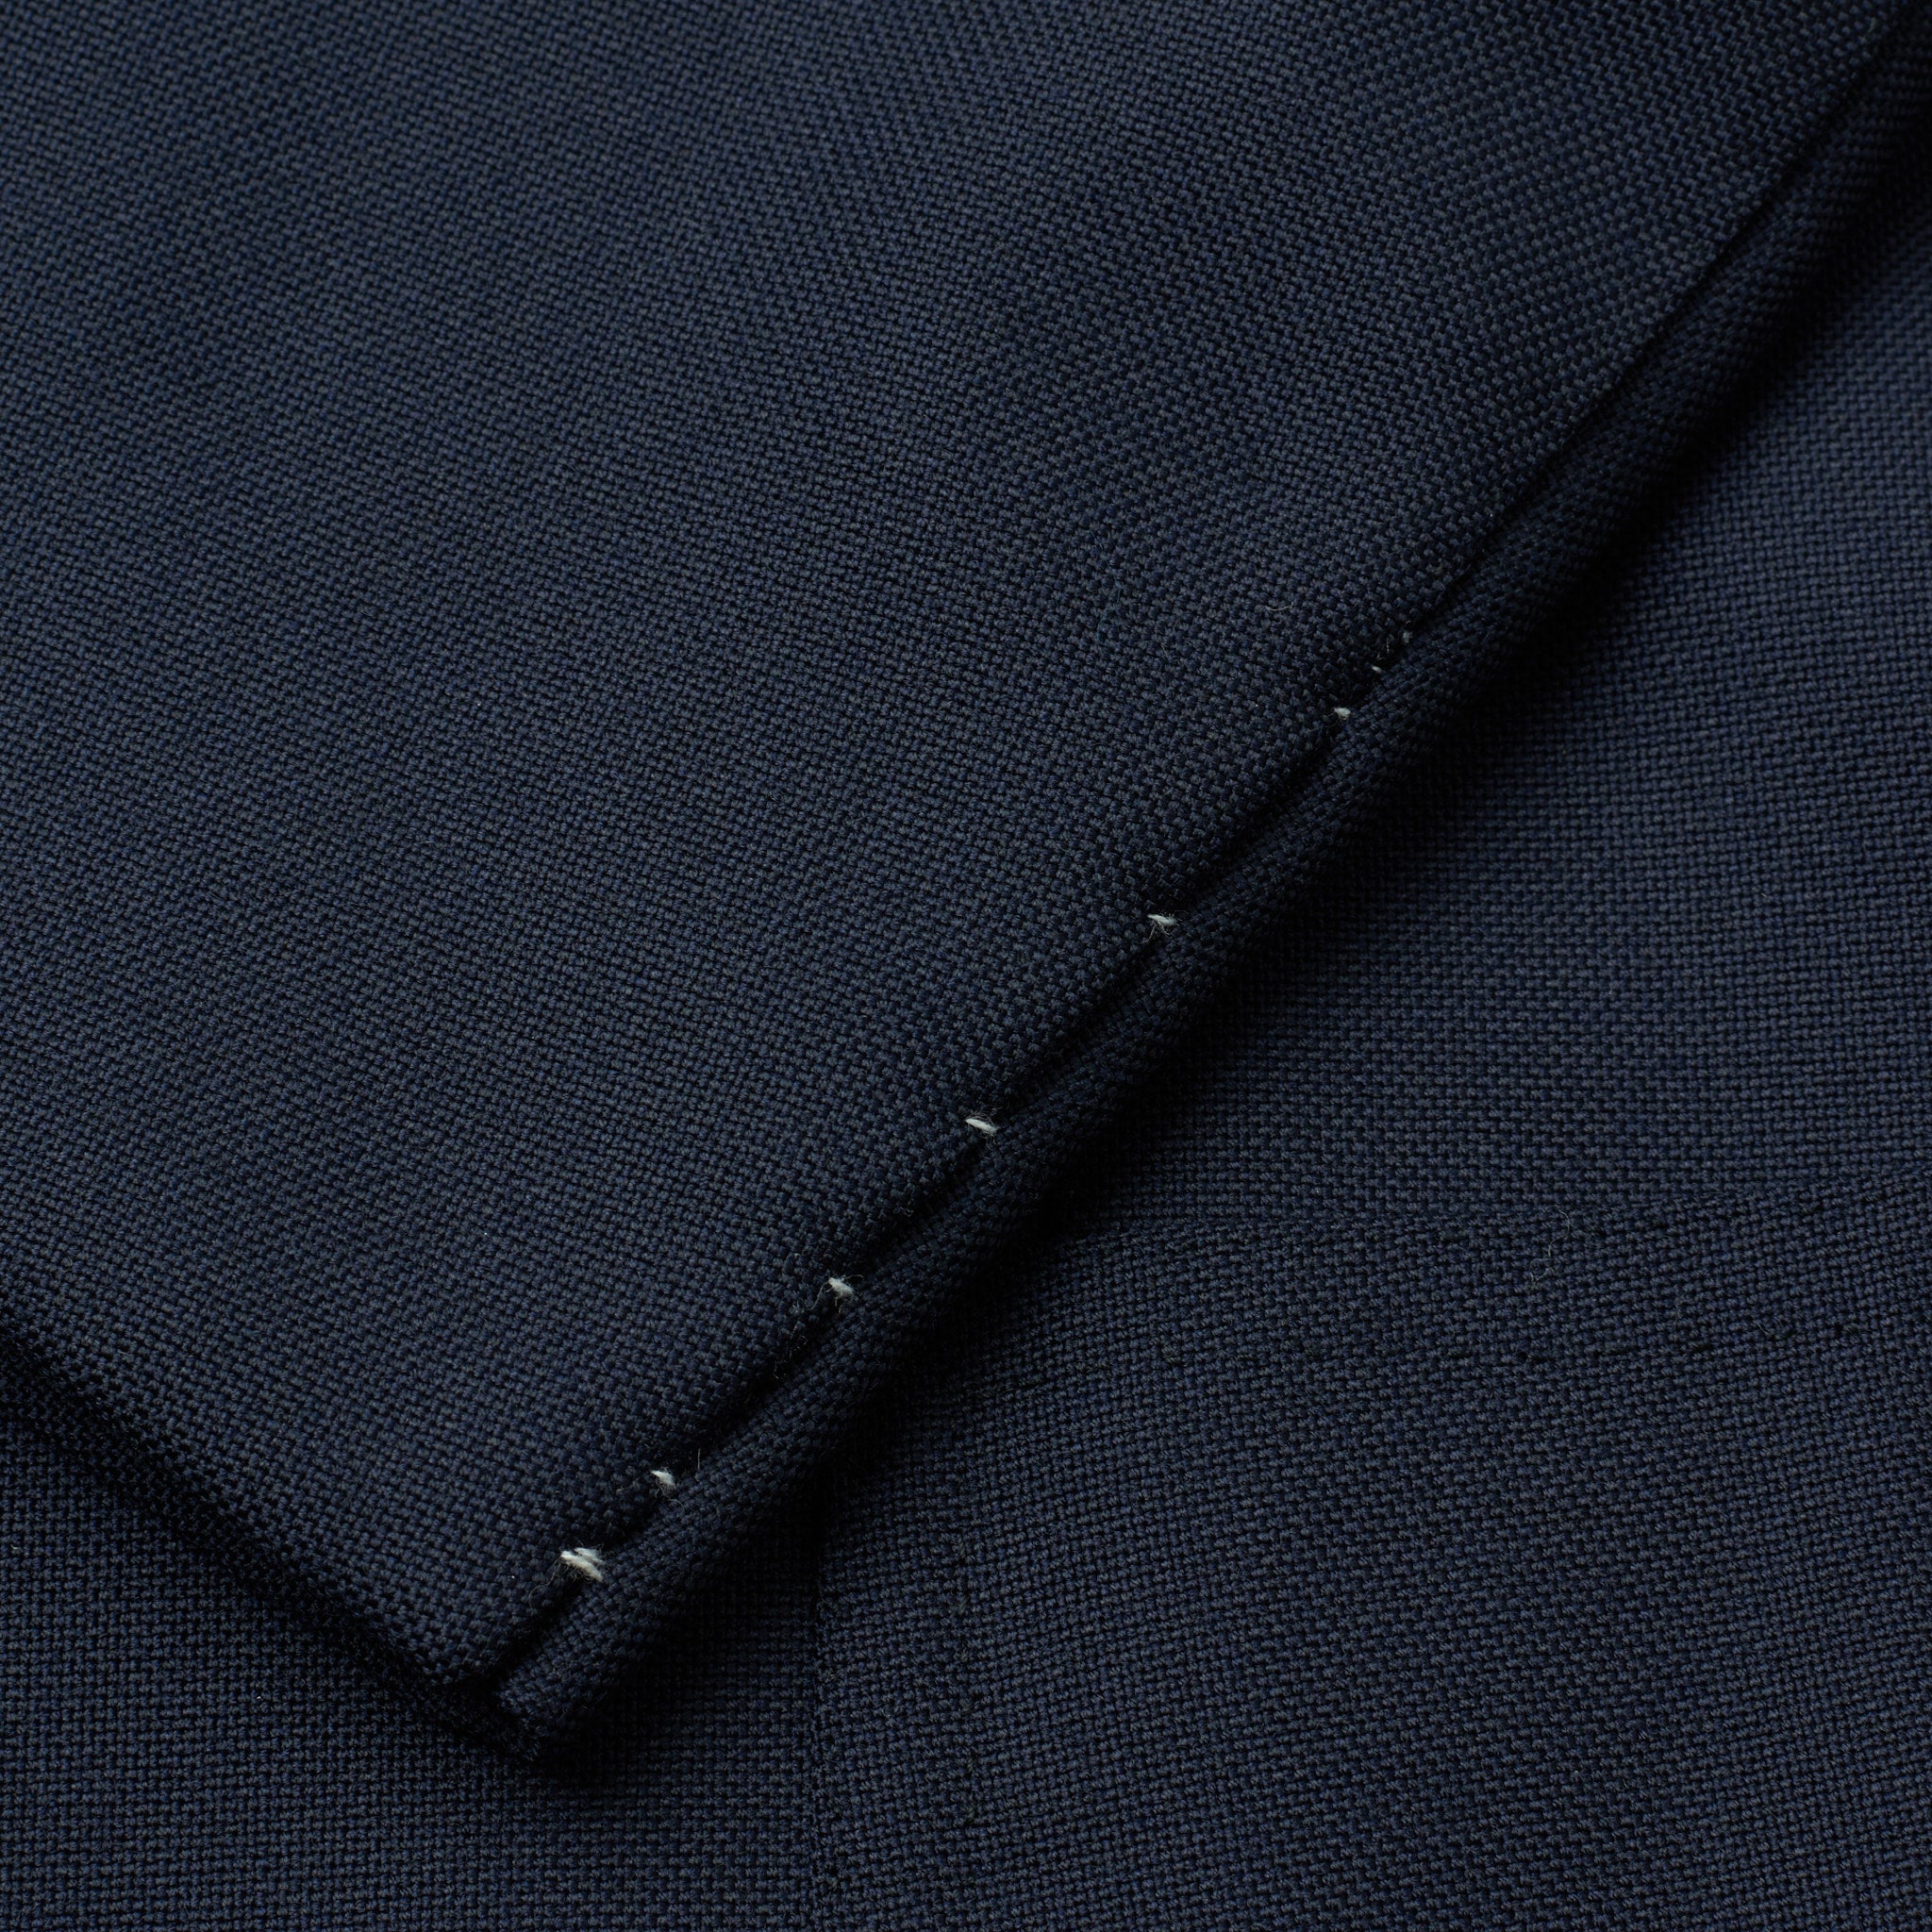 RUBINACCI LH Hand Made Bespoke Navy Blue Wool Mohair Jacket EU 50 NEW US 38 40